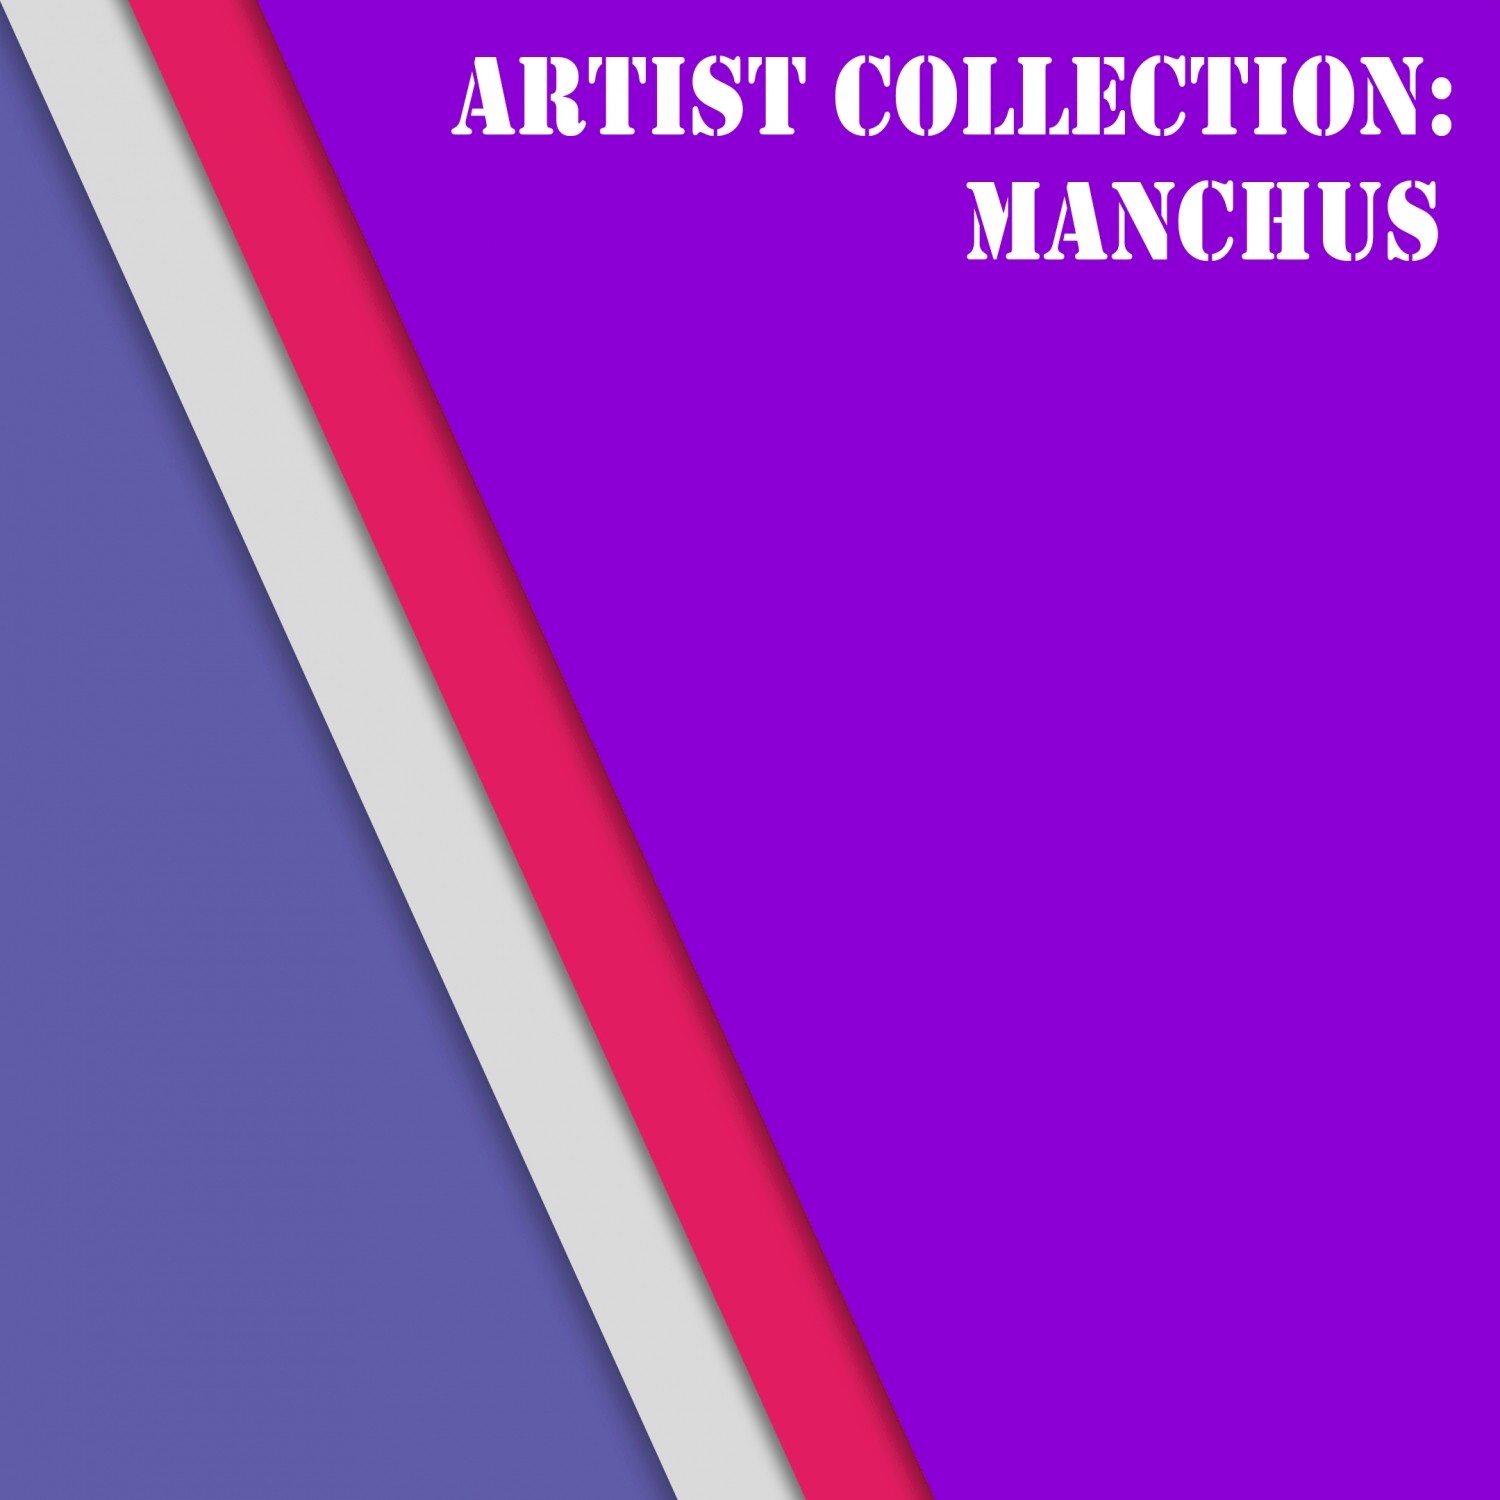 Artist Collection: Manchus